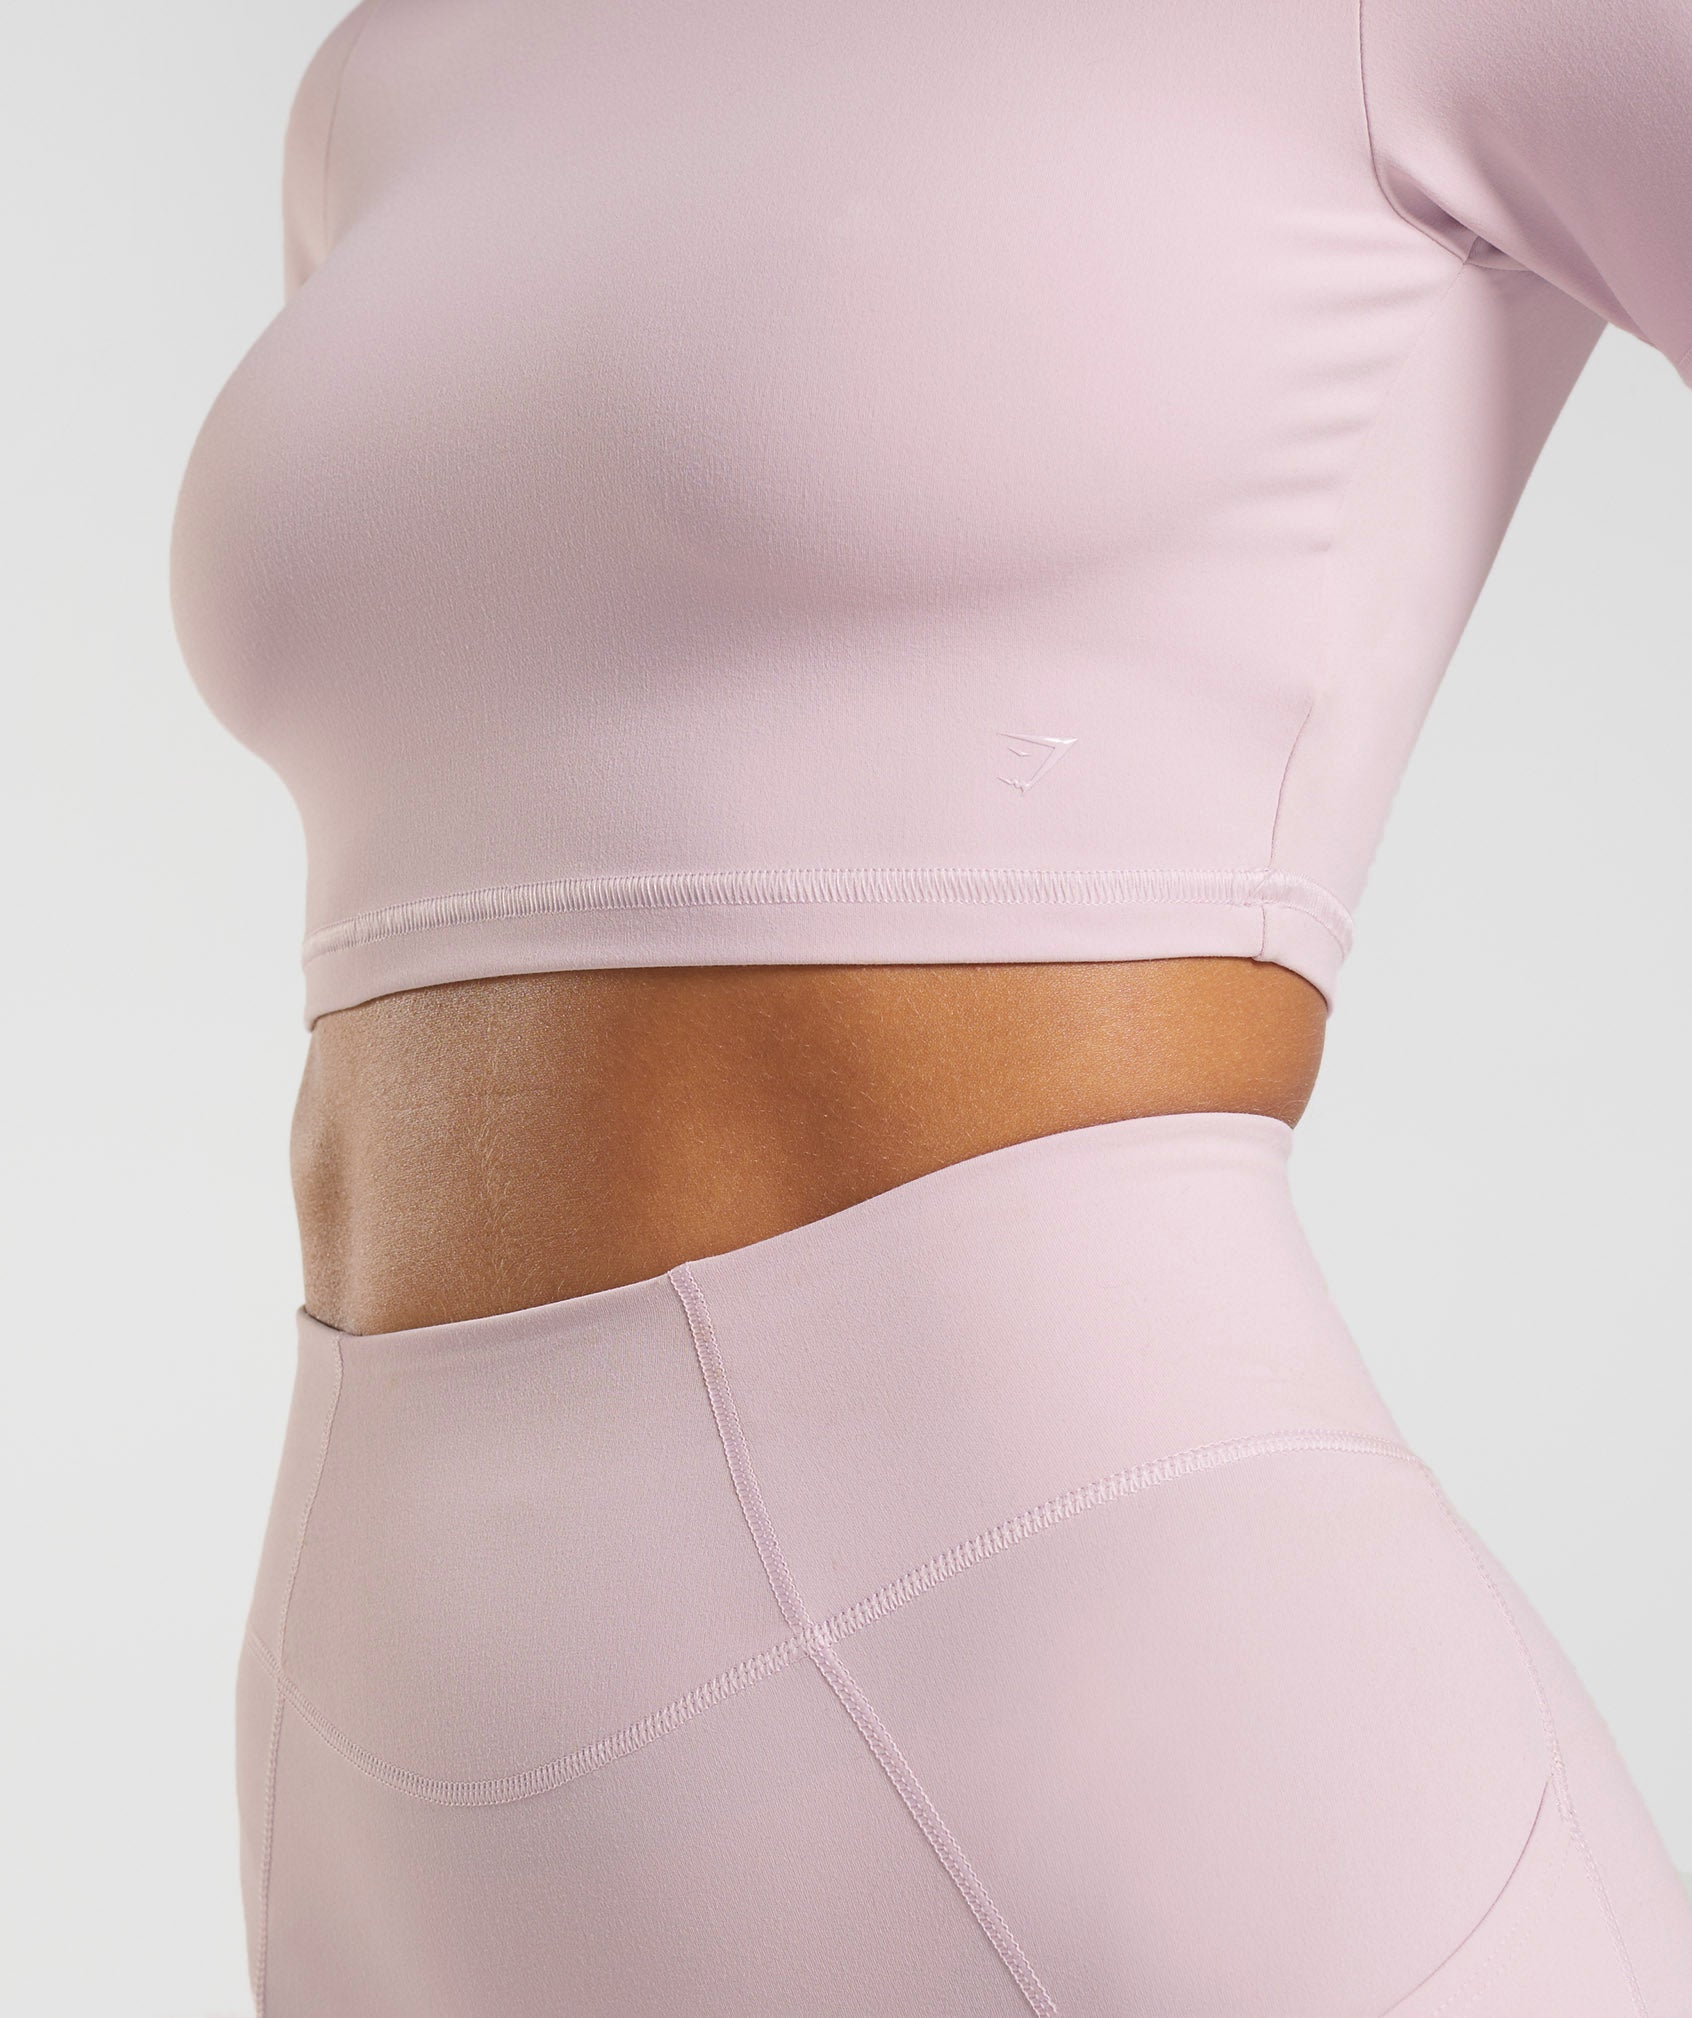 Whitney Short Sleeve Crop Top in Pressed Petal Pink - view 5